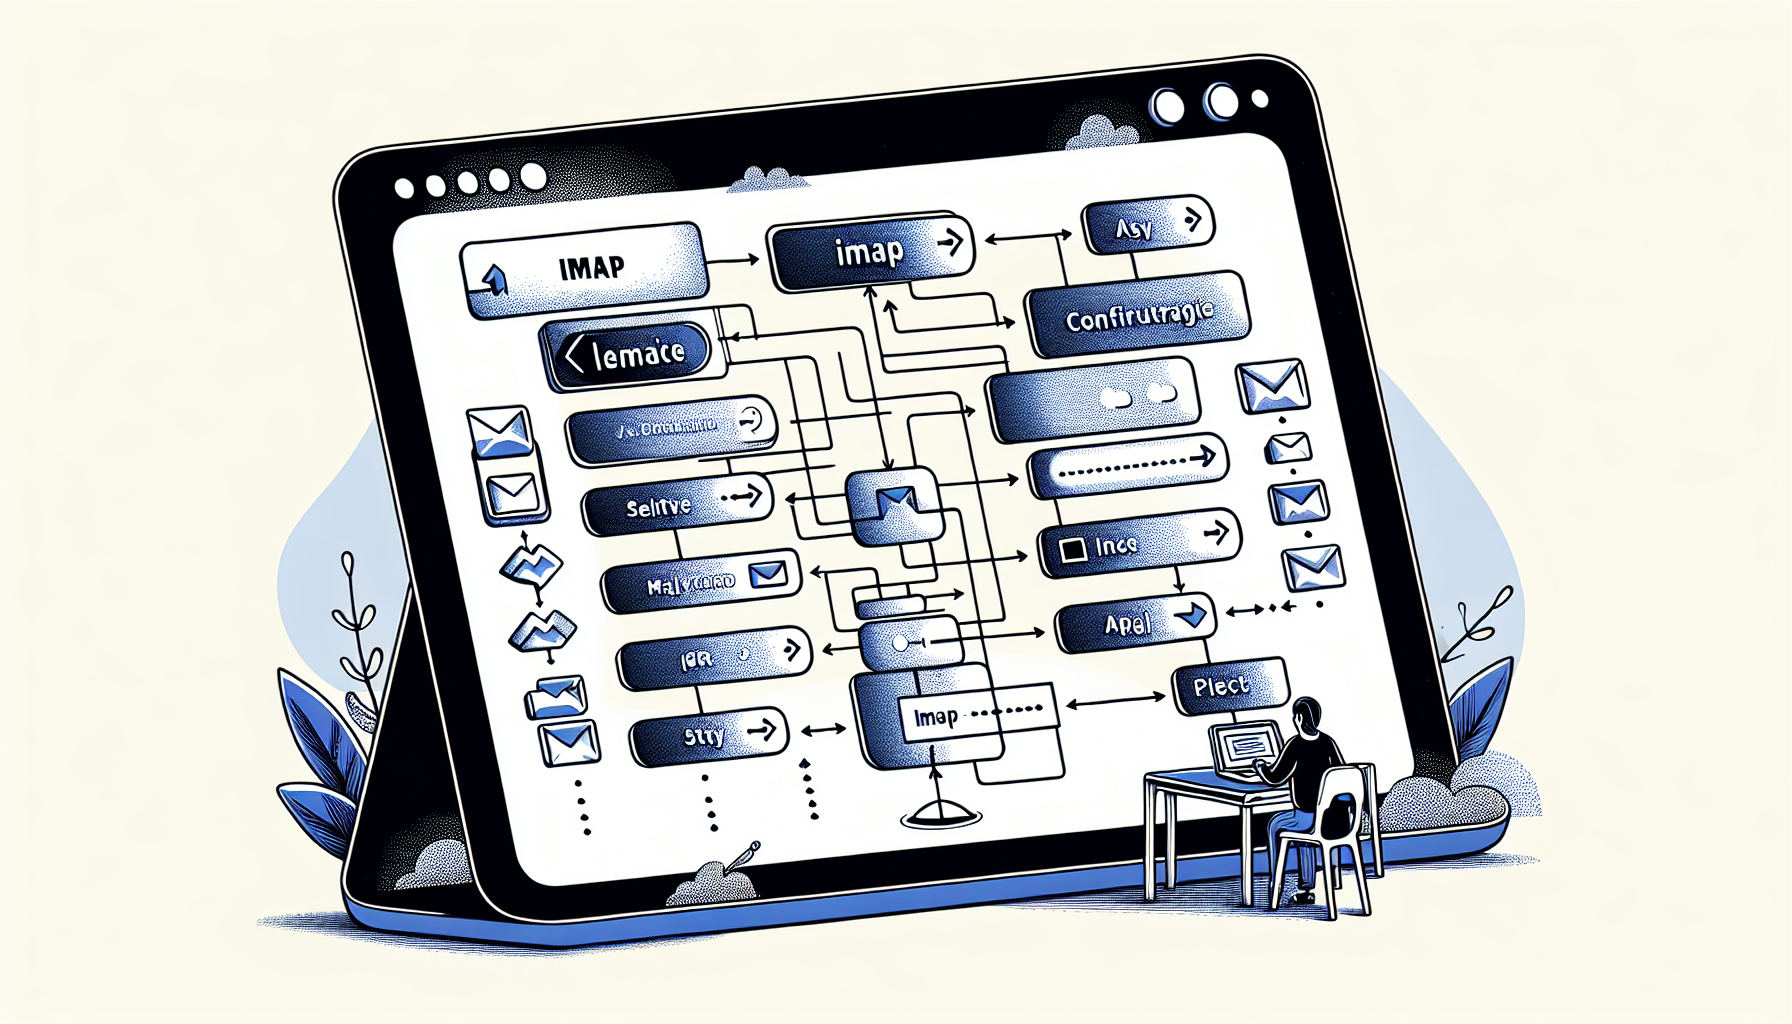 Illustration of email client setup for IMAP